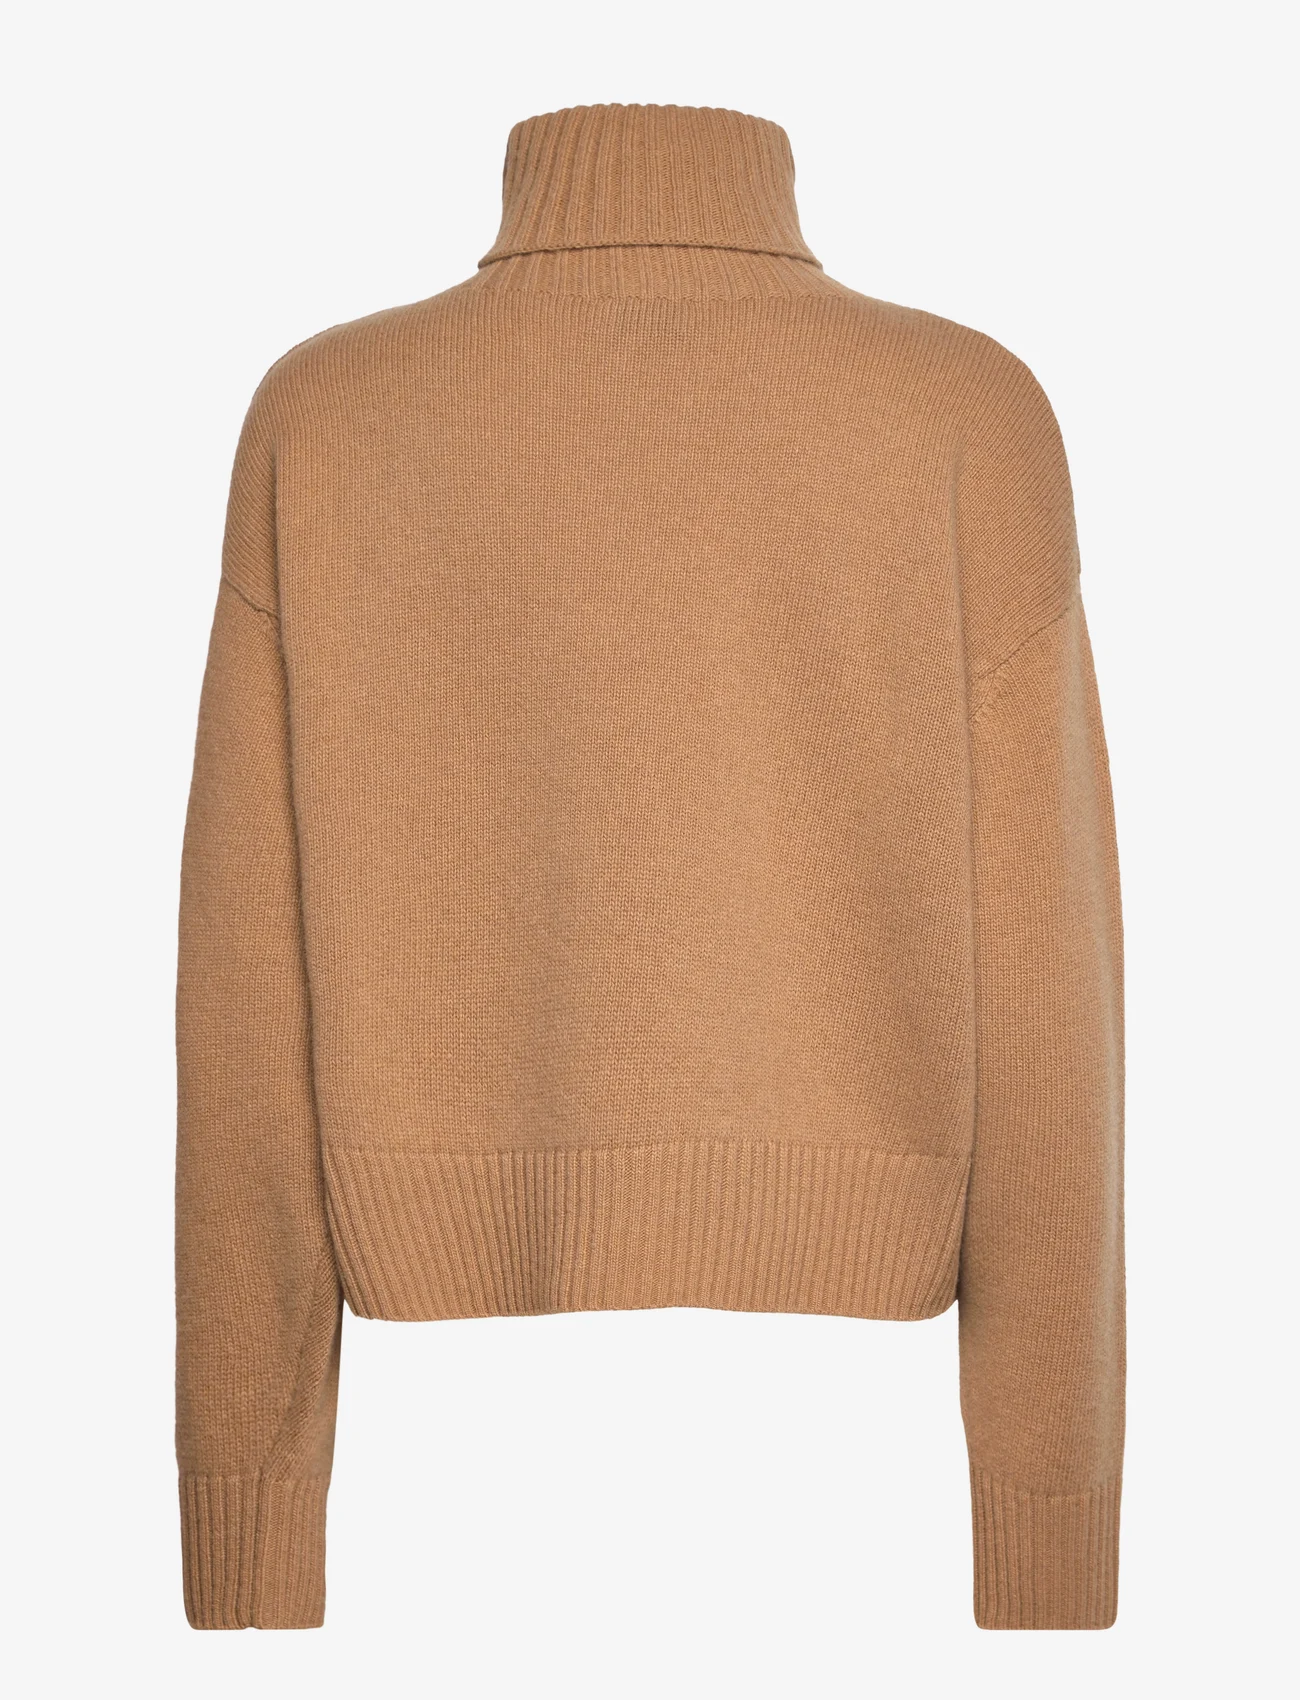 Filippa K - Wool Turtleneck Sweater - rollkragenpullover - camel - 1